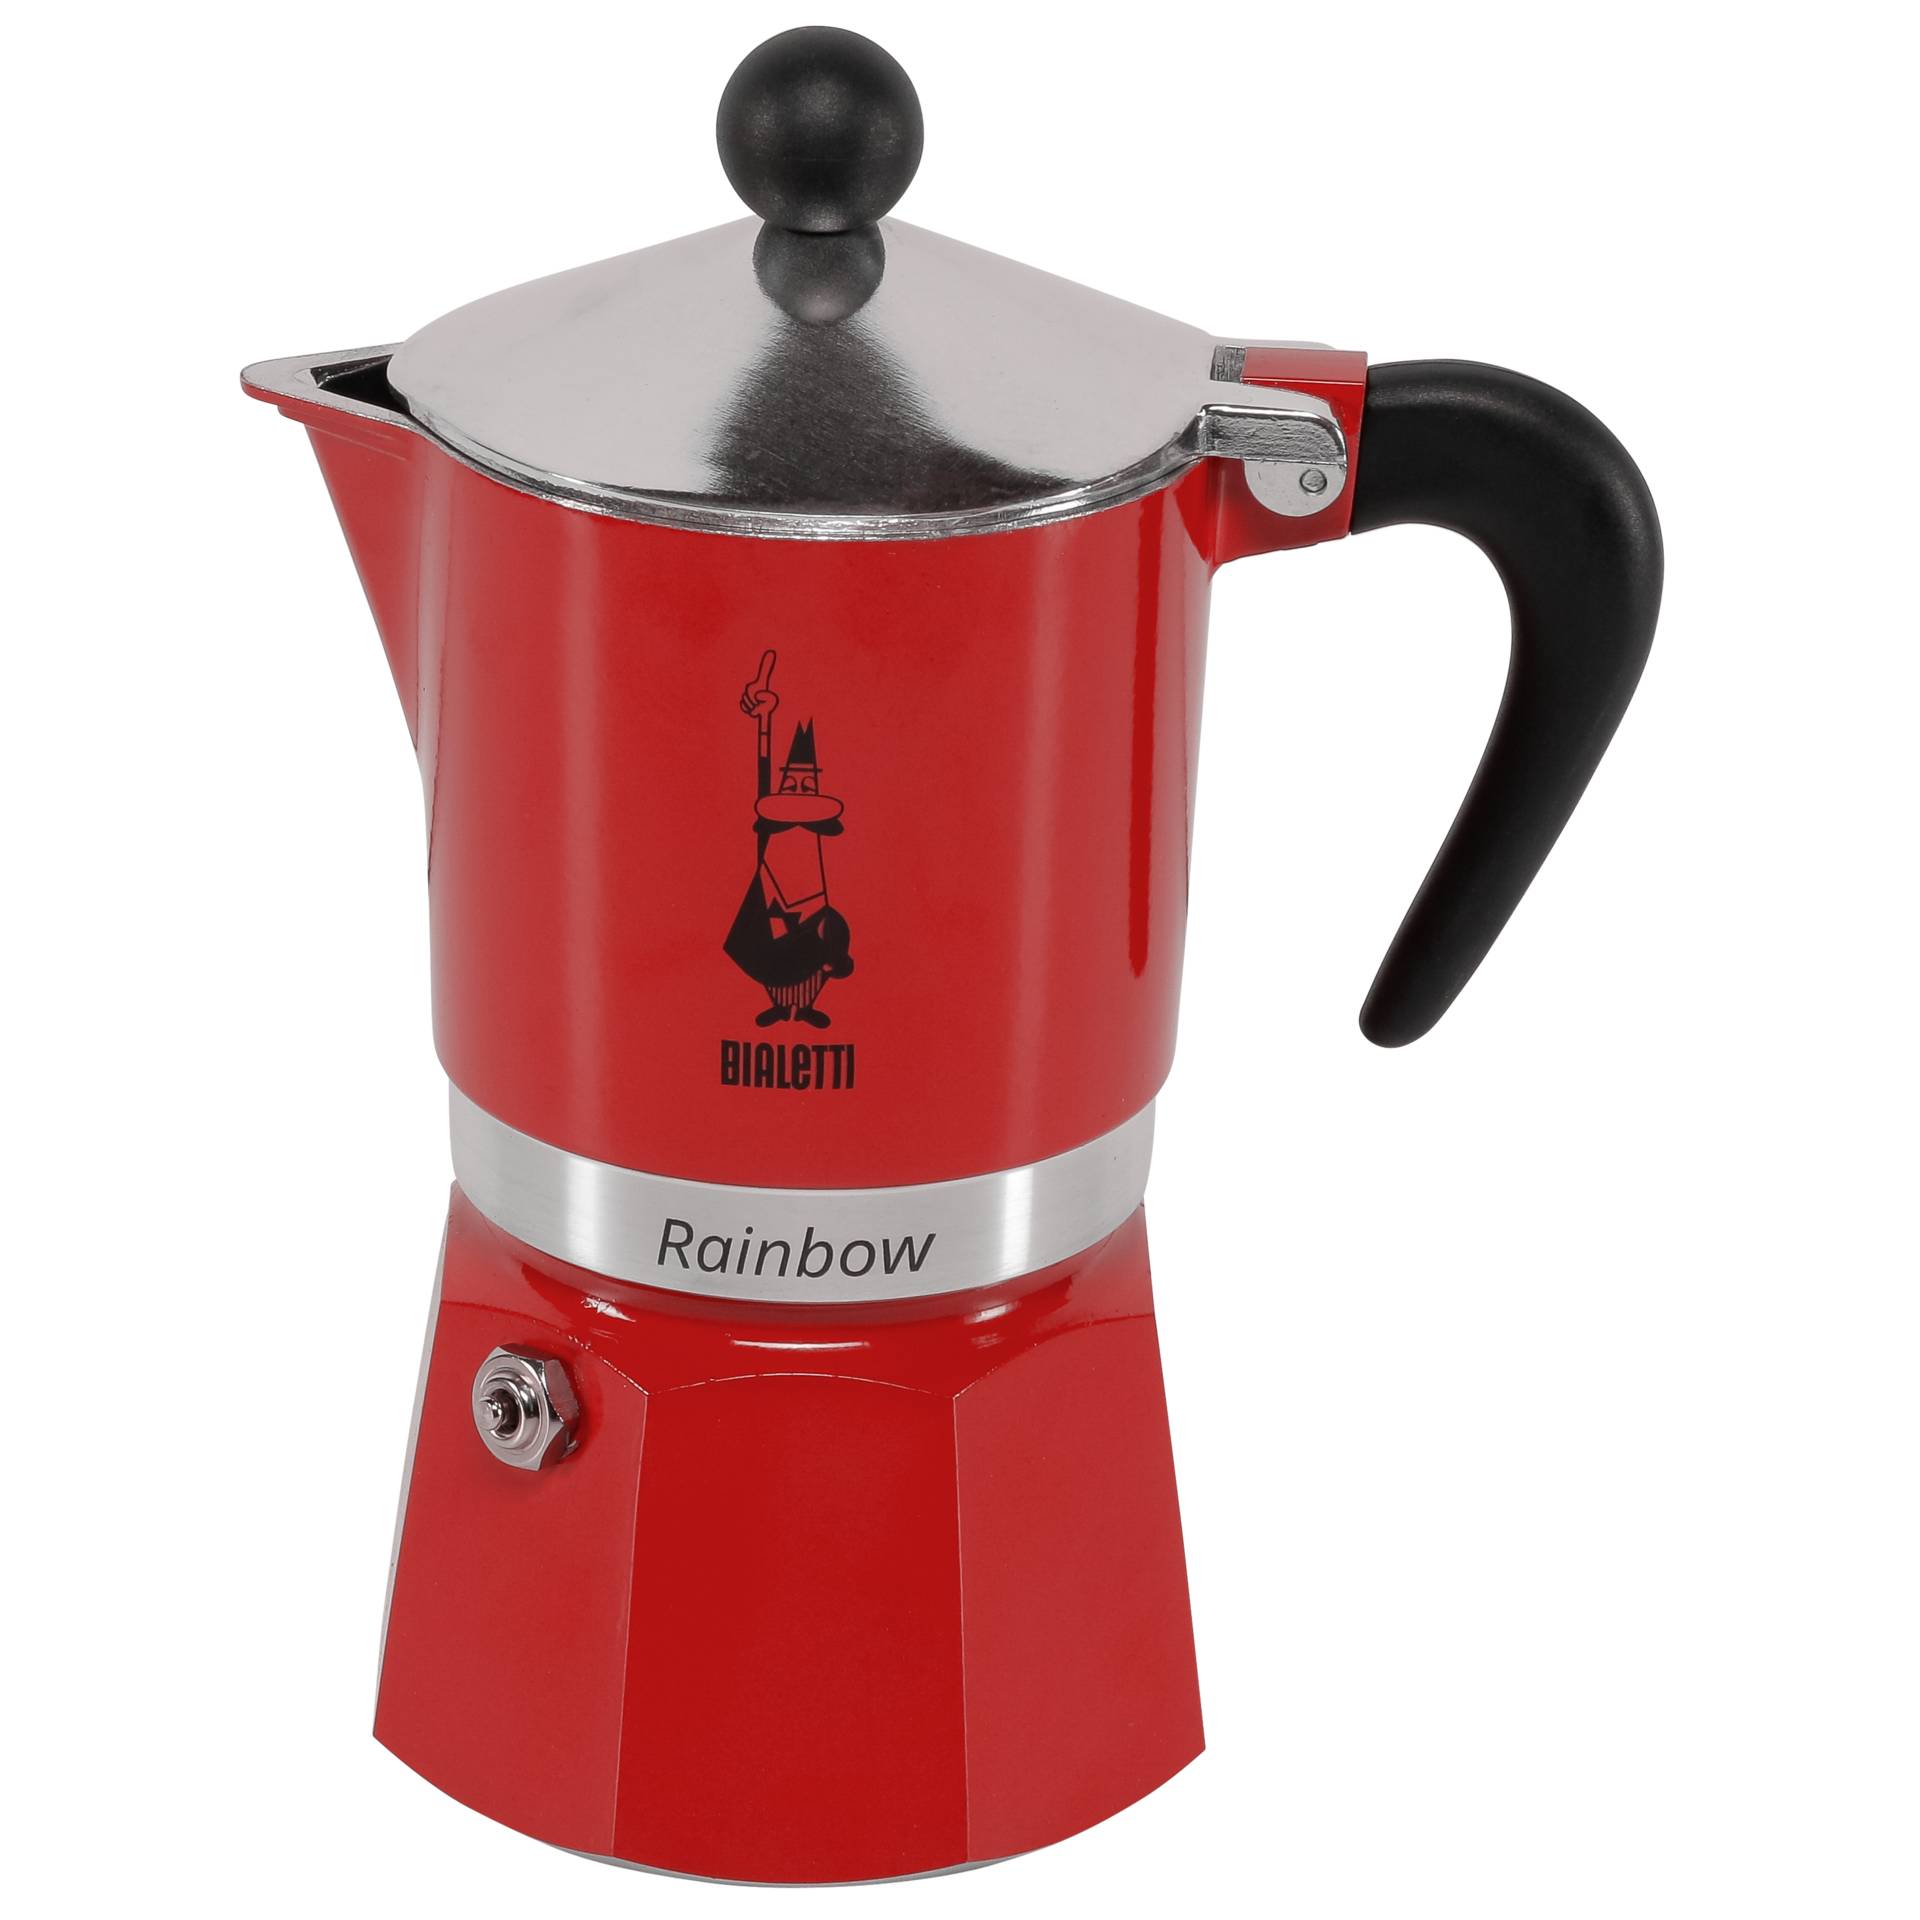  Bialetti venus Stovetop espresso coffee maker, 6 -Cup,  Stainless Steel: Stovetop Espresso Pots: Home & Kitchen